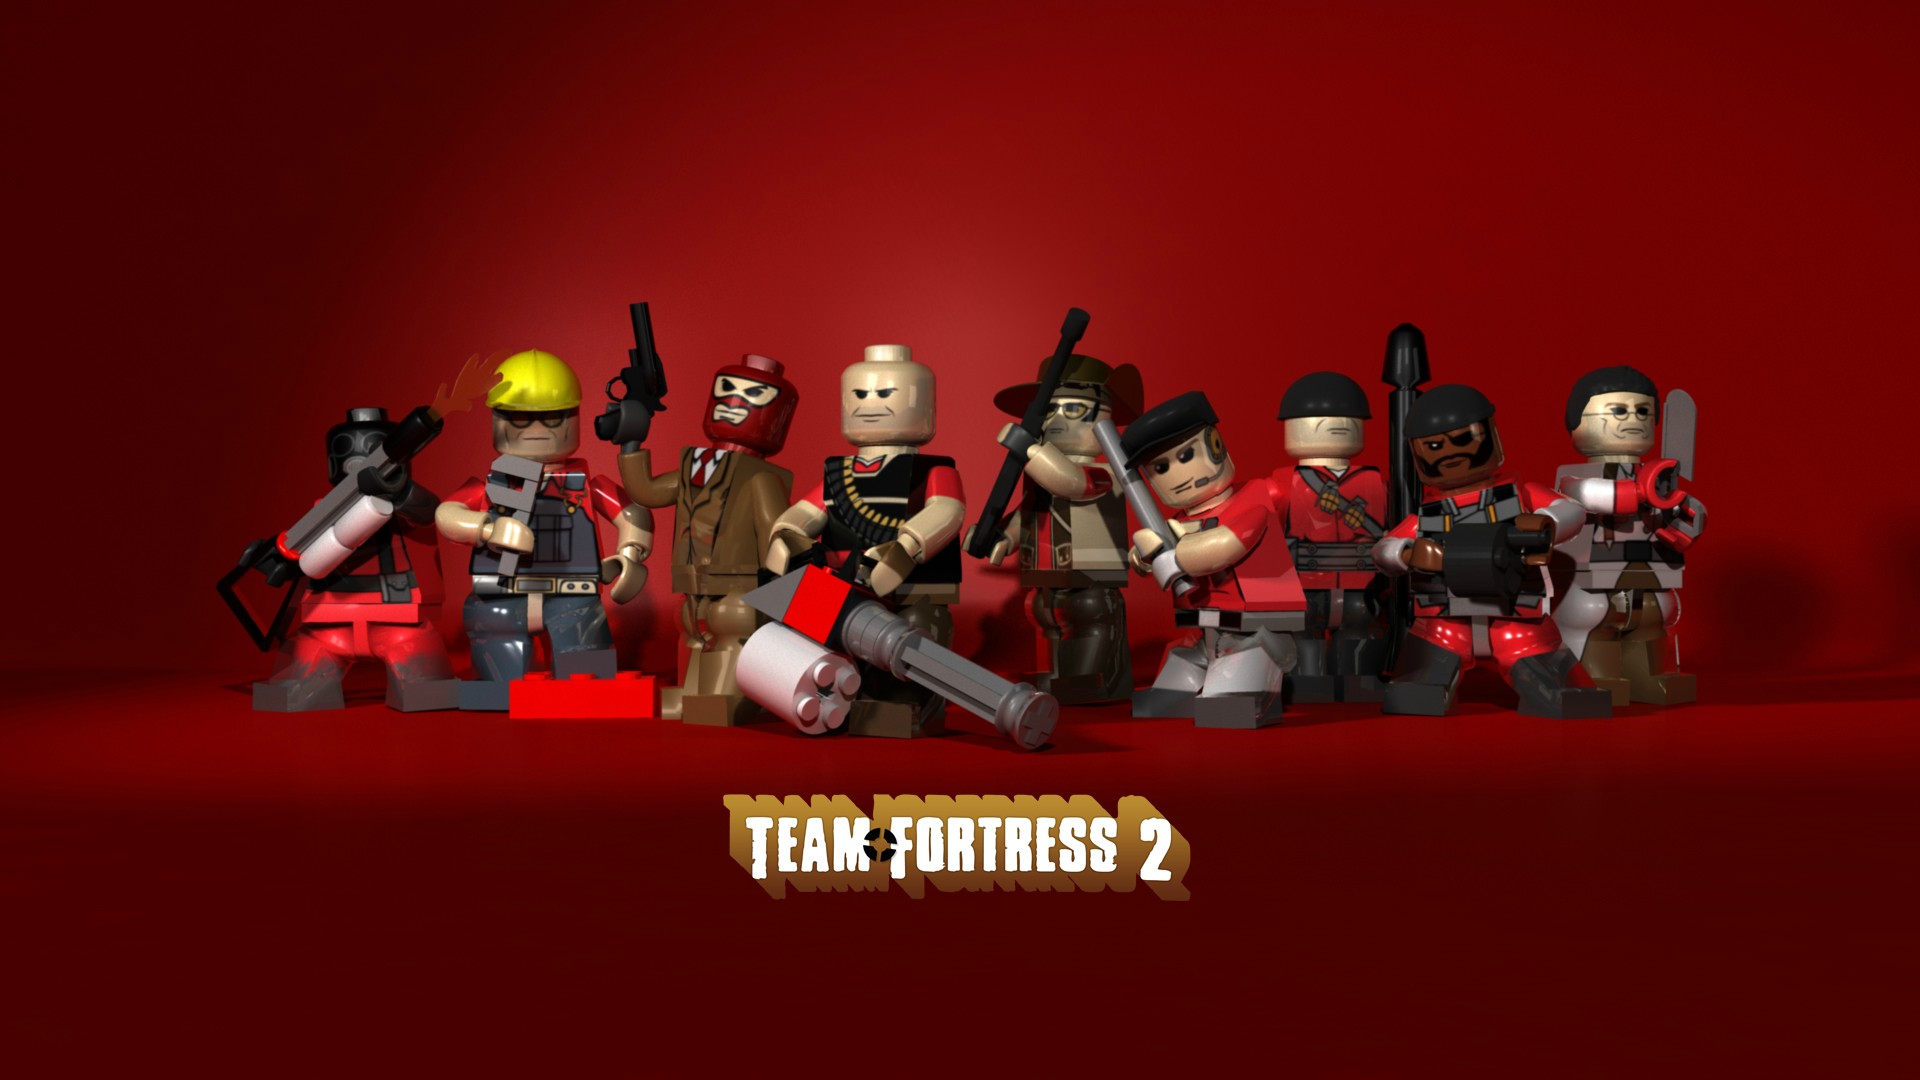 team fortress 2 fond d'écran,jouet,figurine,figurine,équipe,équipe